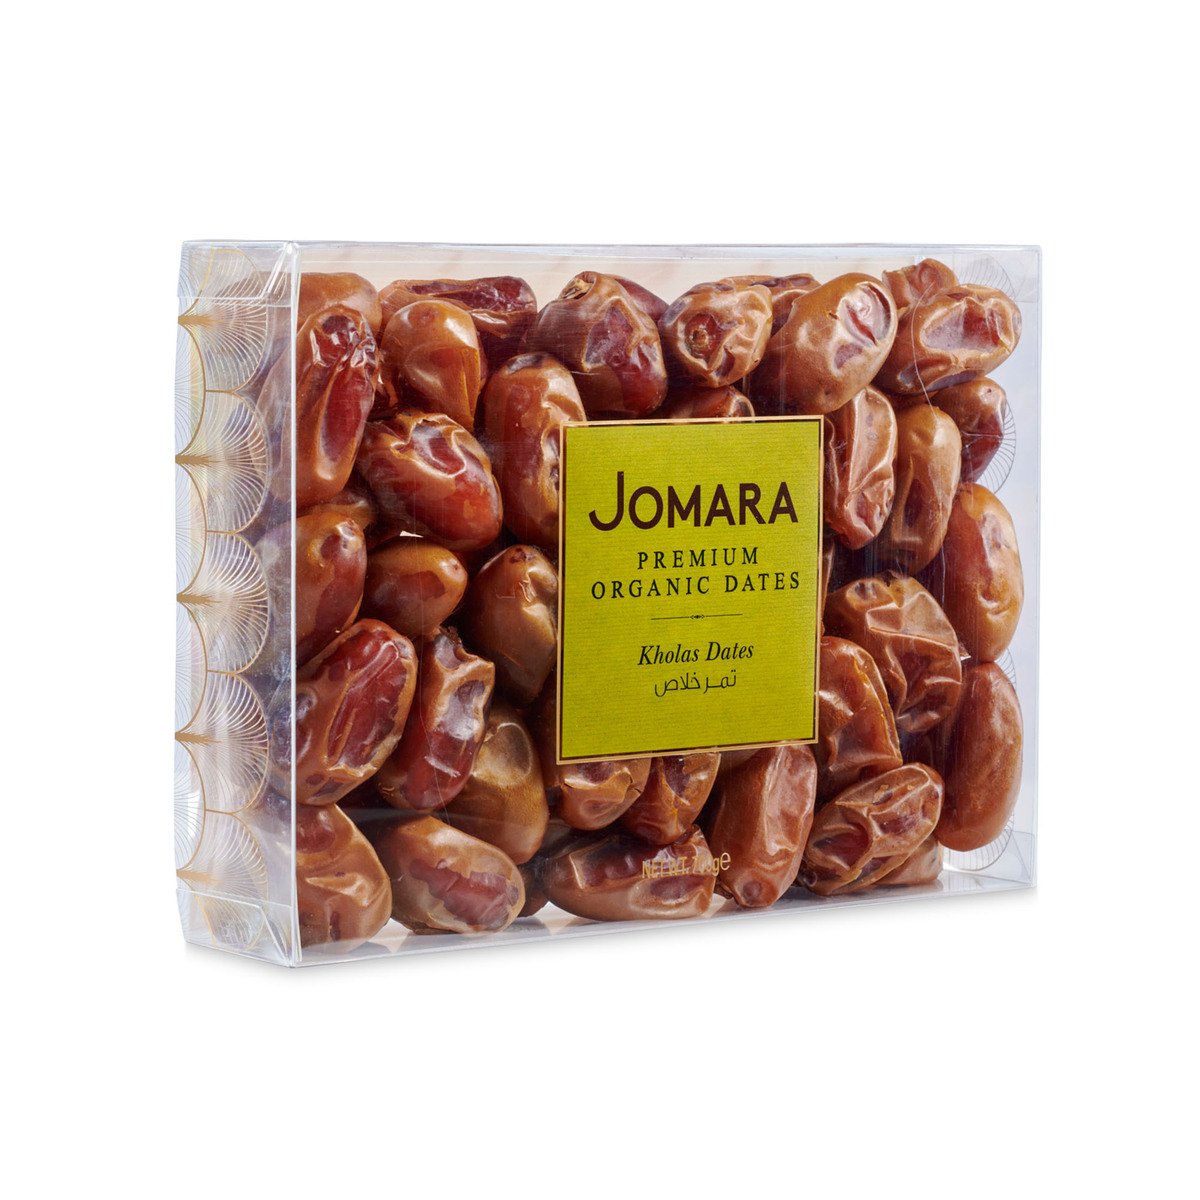 Jomara Organic Kholas Dates 700 g